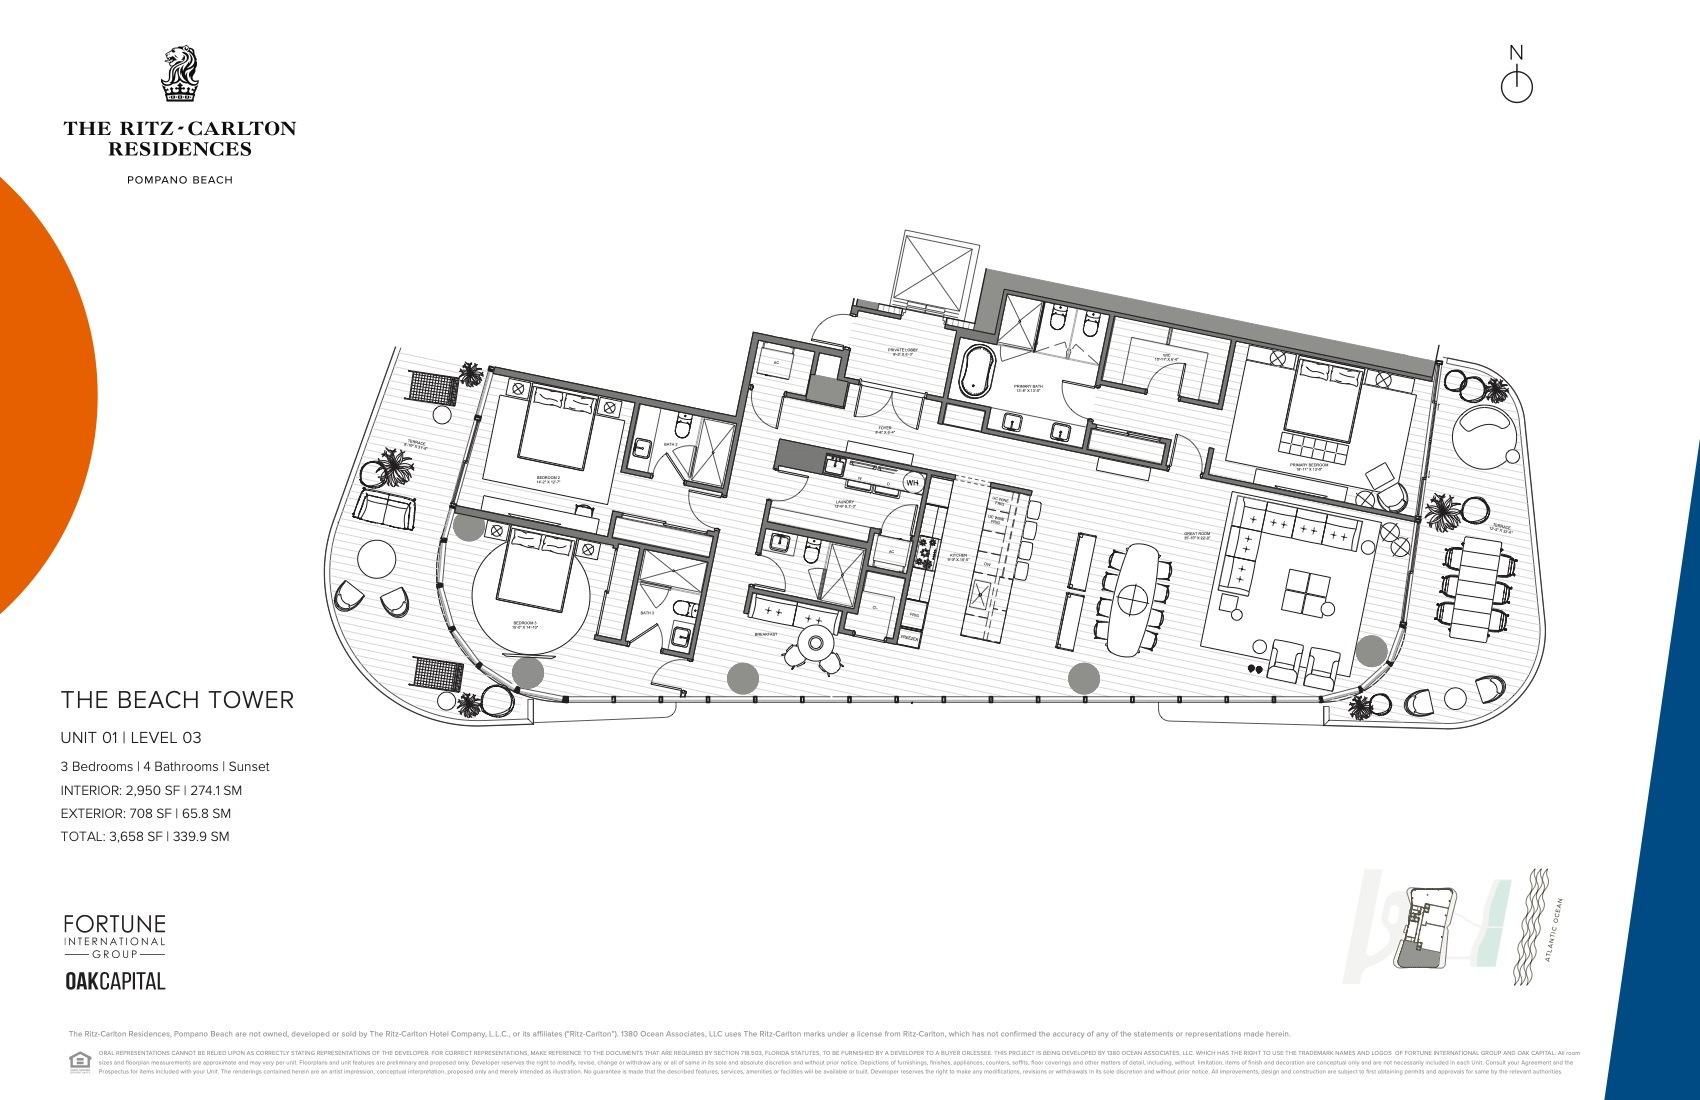 Floor Plan for The Ritz Carlton Pompano Floorplans, Beach Tower Unit 01